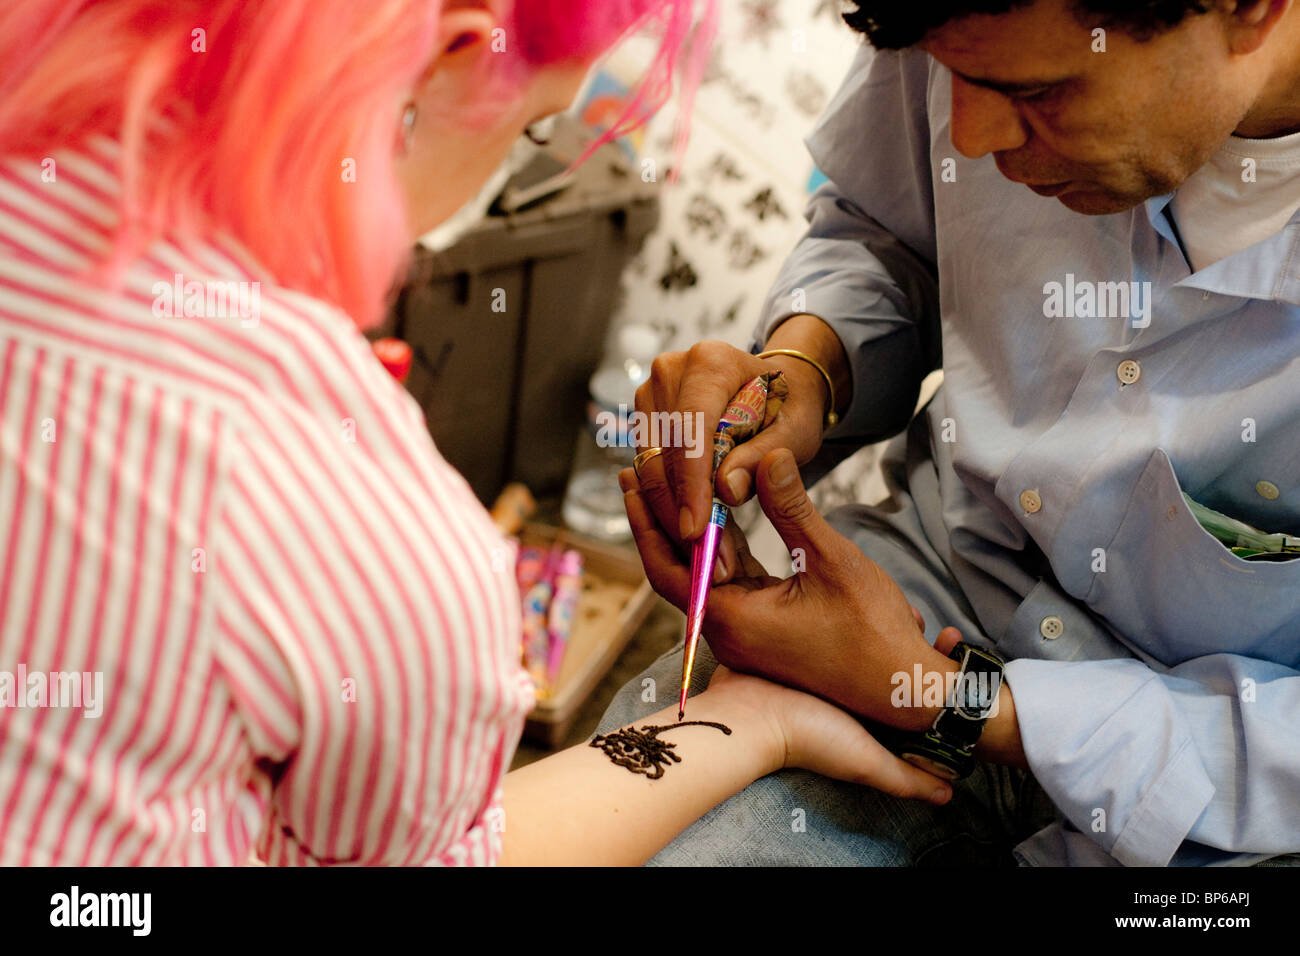 Henna tattoo artist at work, applying black henna, Covent Garden, London, England, UK Stock Photo